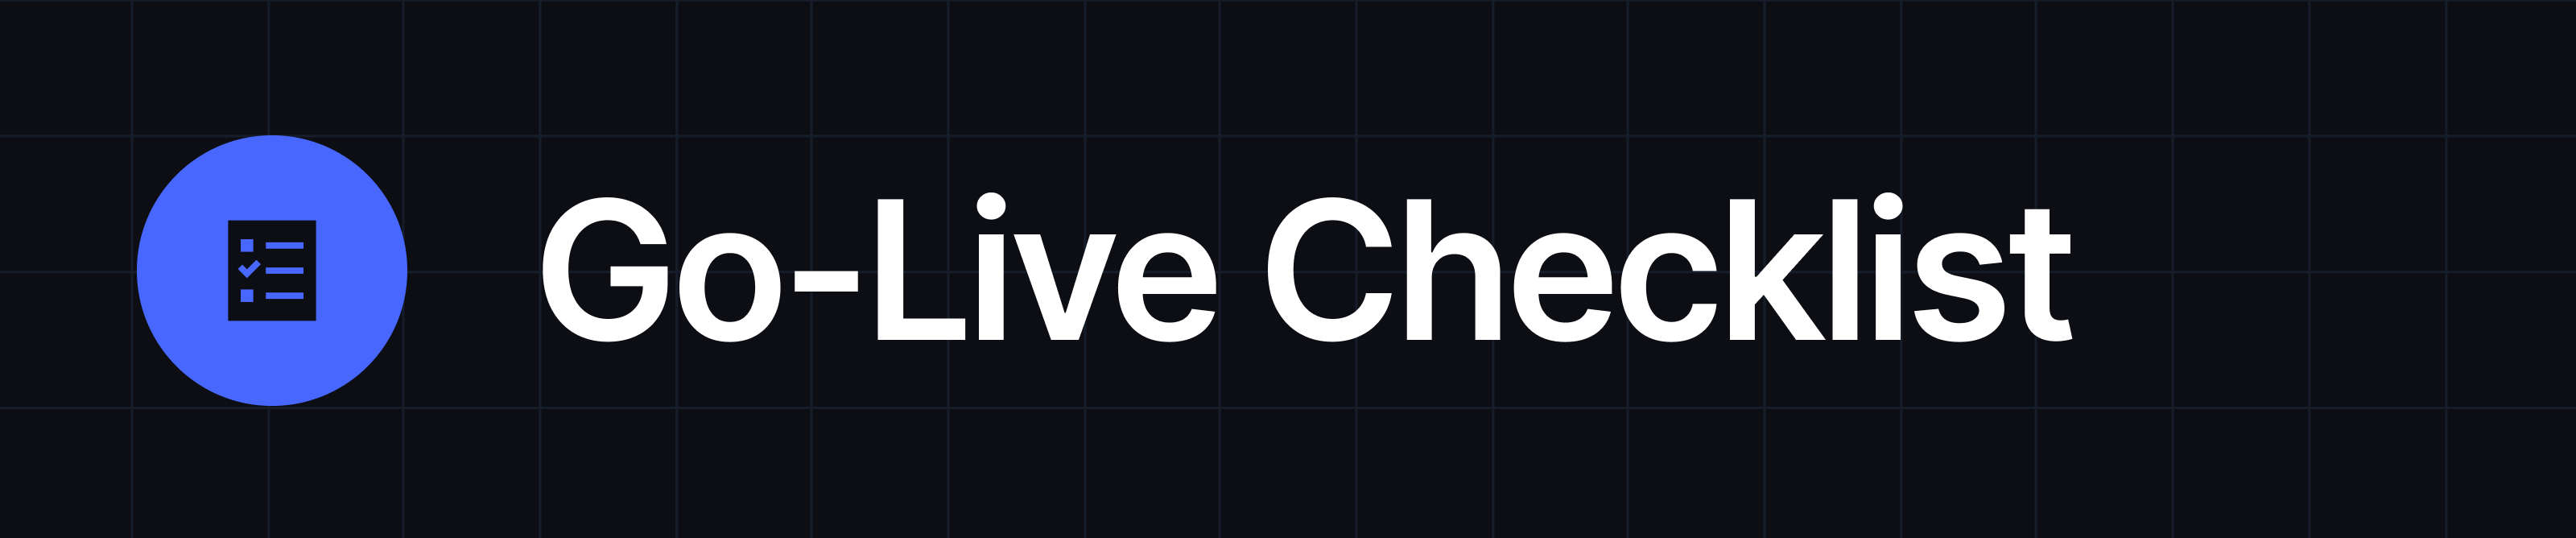 Go-Live Checklist